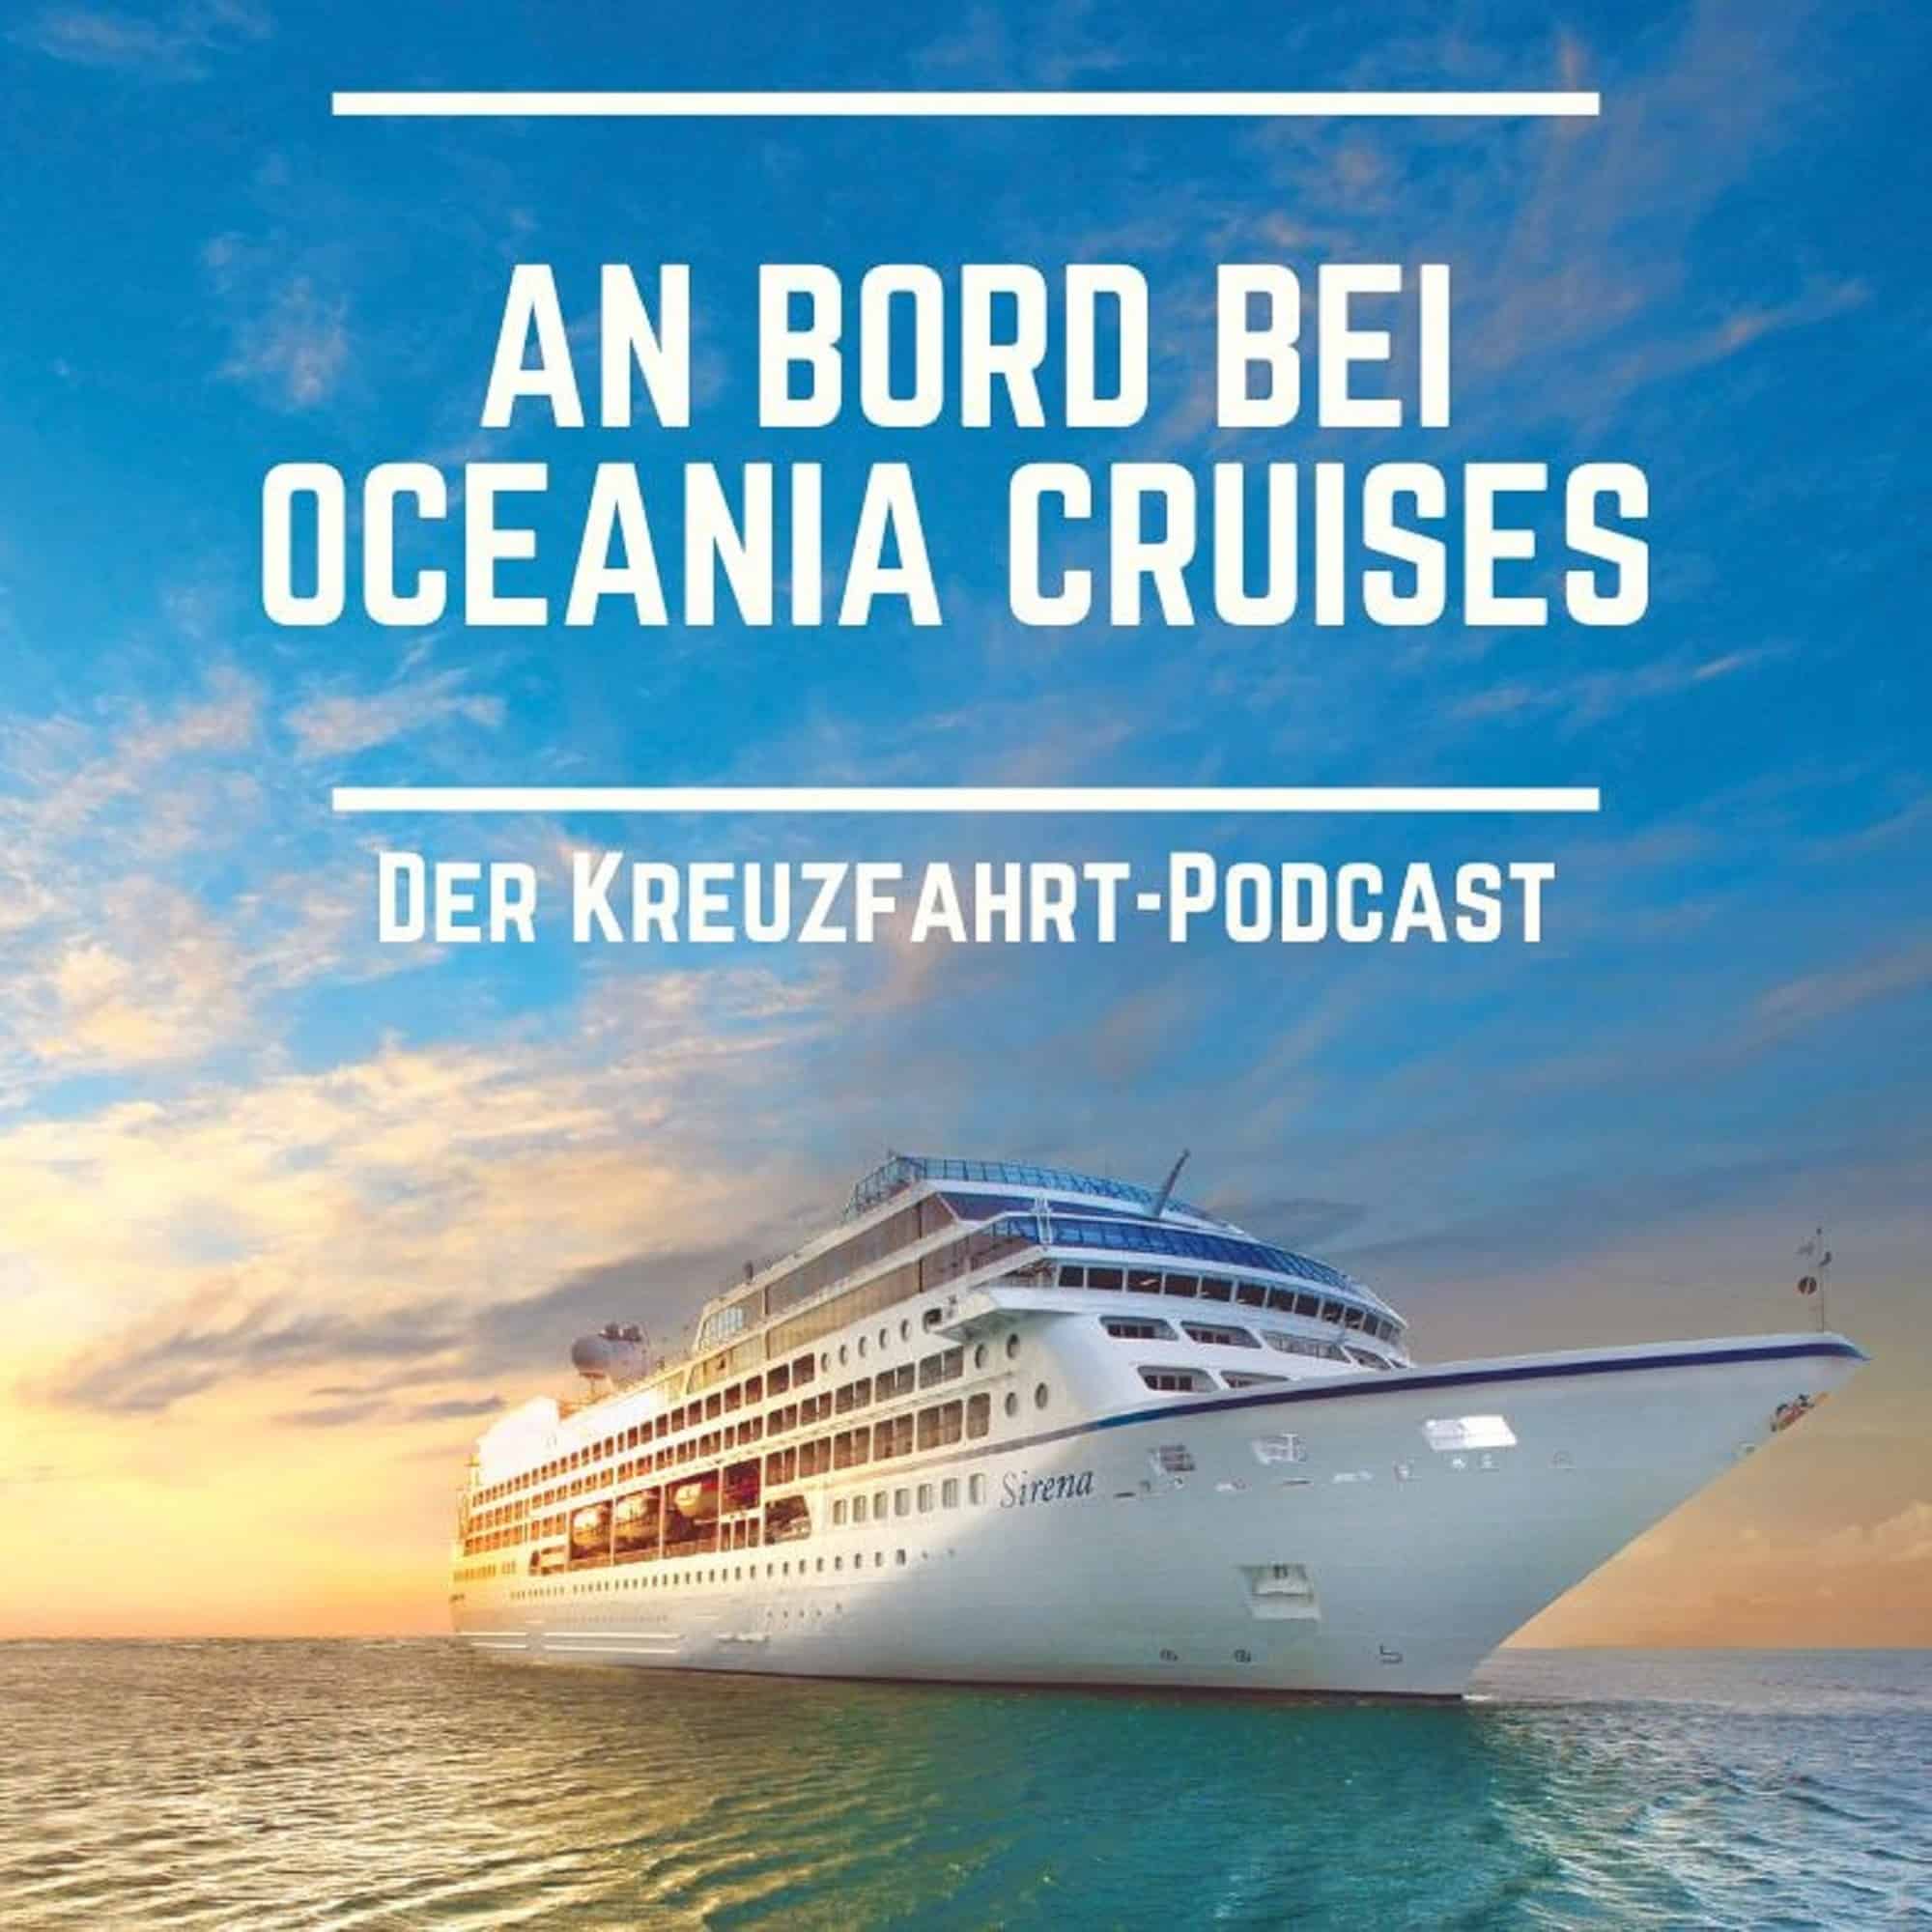 Oceania Cruises der Kreuzfahrt Podcast zum Reisen aufs Meer